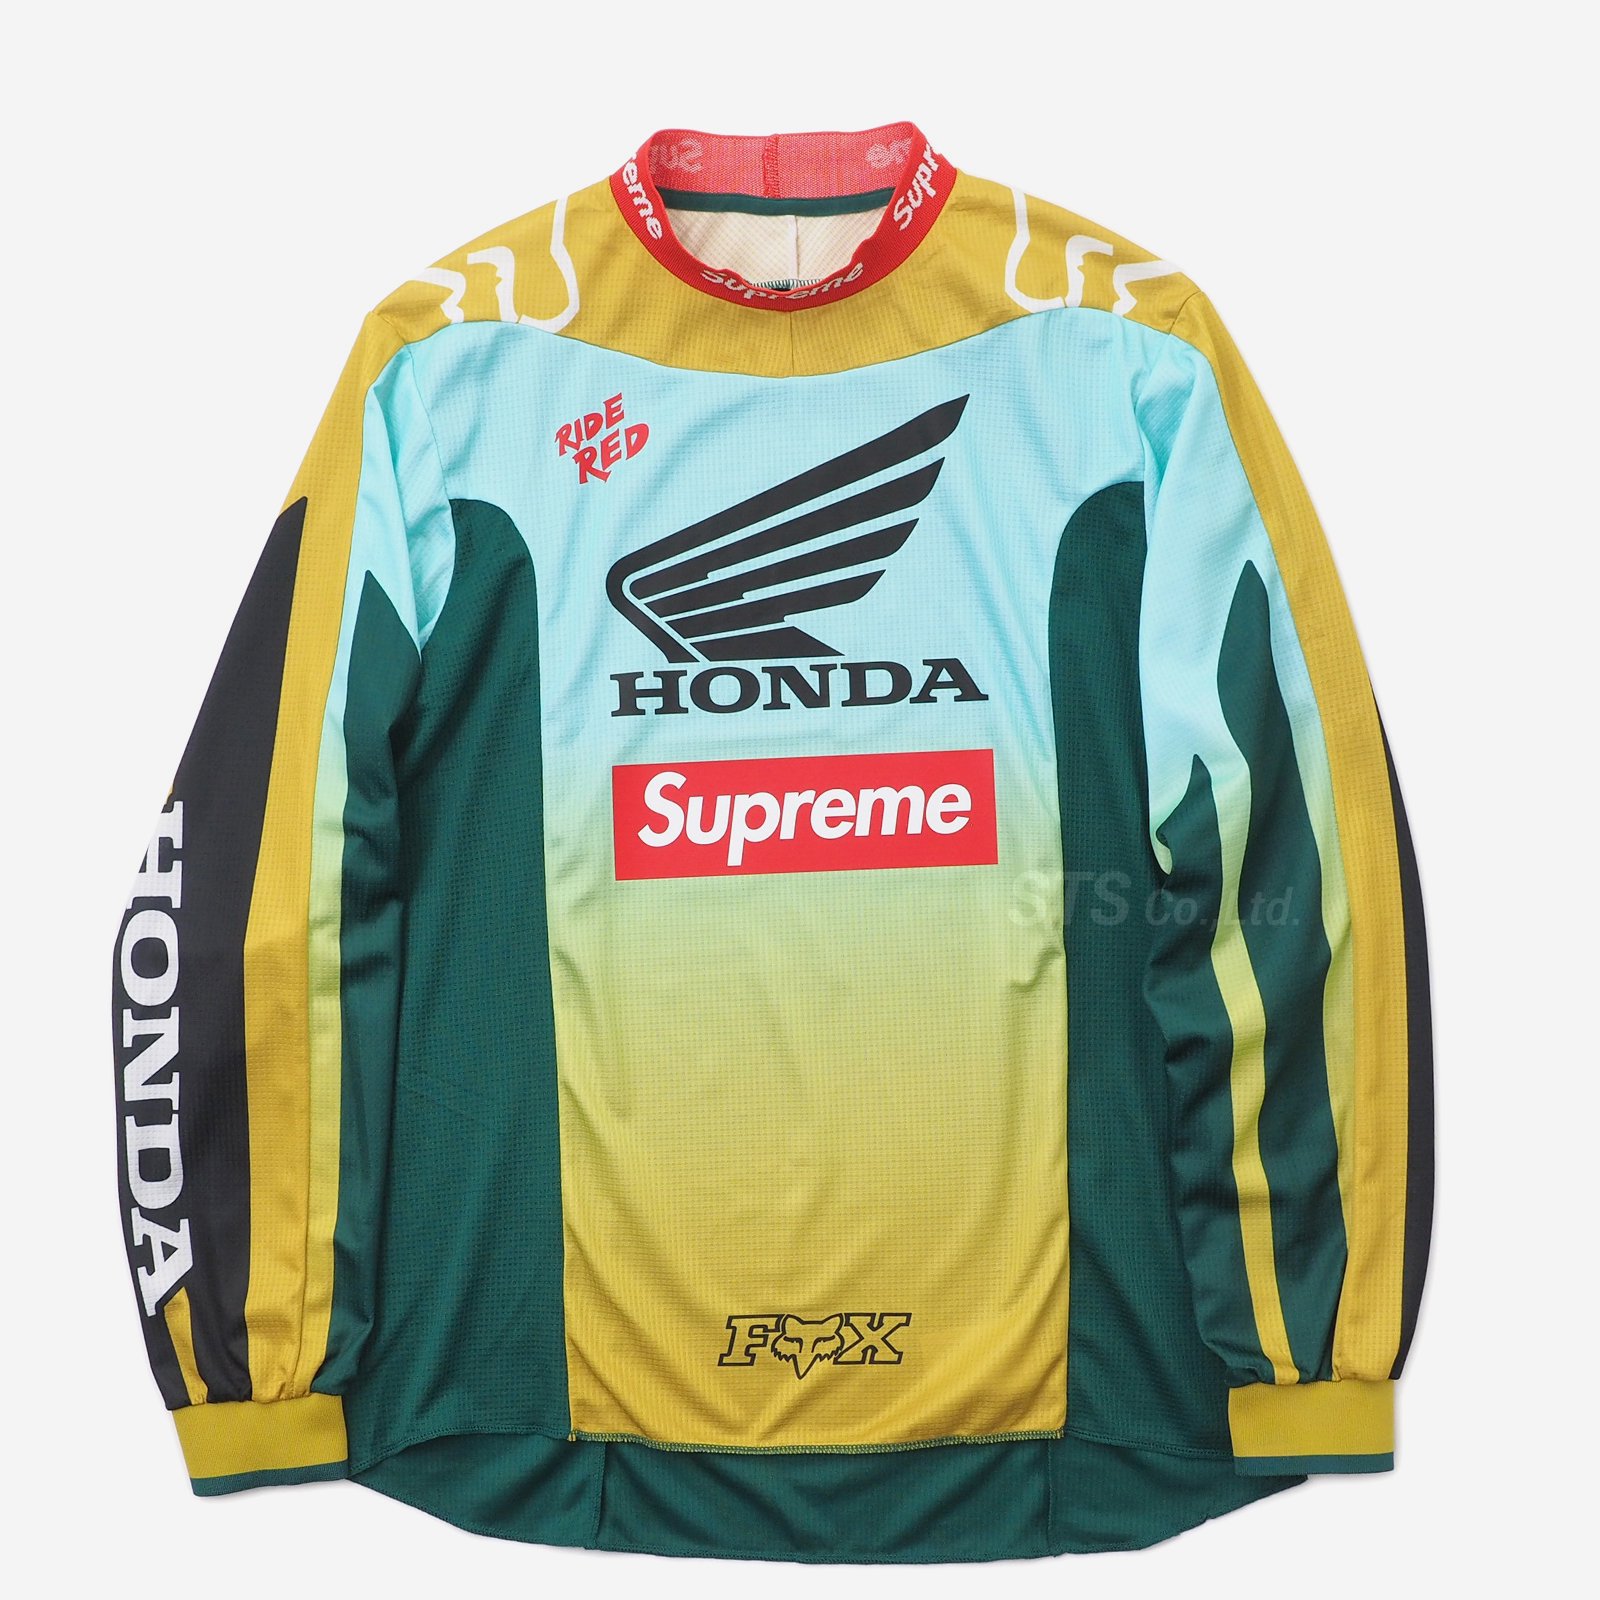 Supreme / Fox Racing Moto Jersey Top